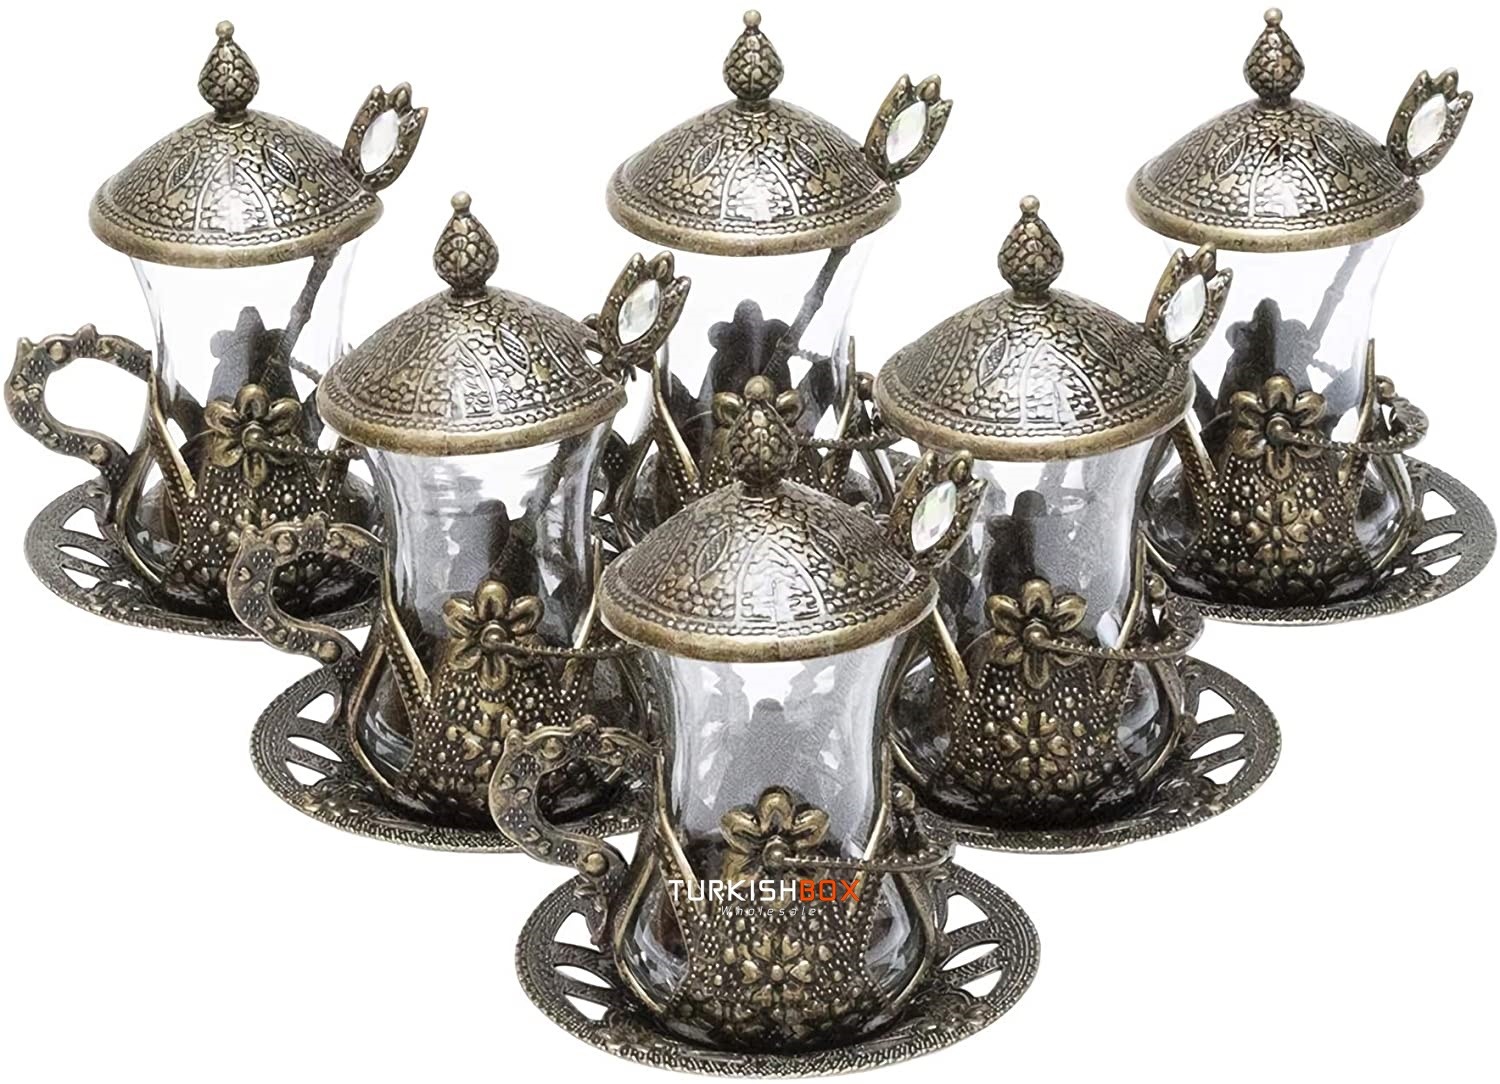 https://turkishbox.com/wholesale/wp-content/uploads/sites/2/2022/06/Turkish-Tea-Set-with-Spoon-Antique.jpg